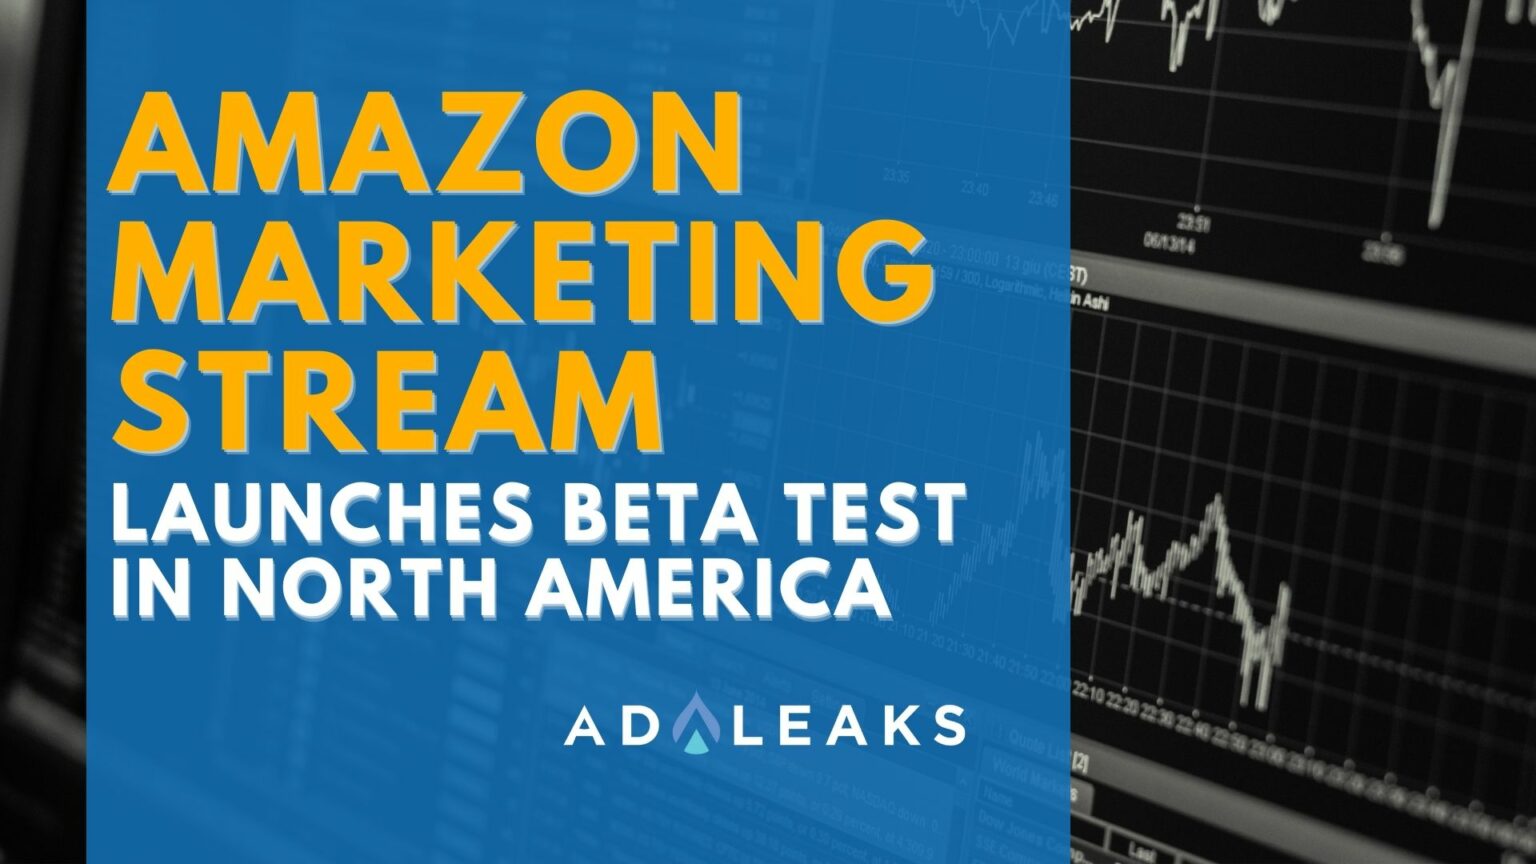 Amazon Marketing Stream Launches Beta Test in North America